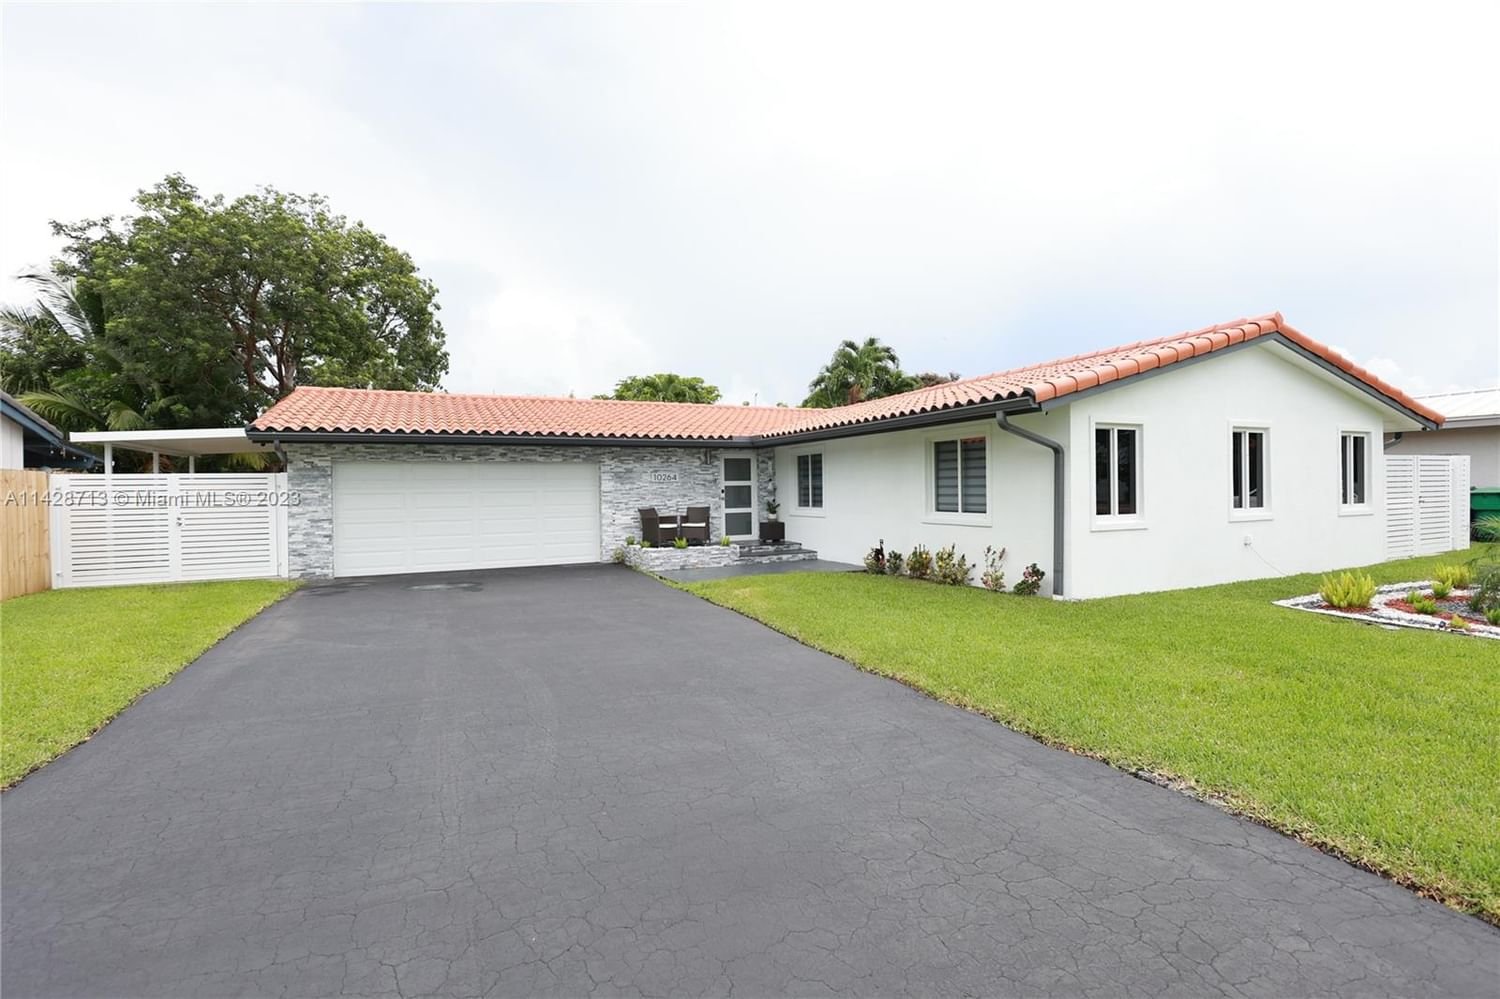 Real estate property located at 10264 129th Ct, Miami-Dade County, Miami, FL